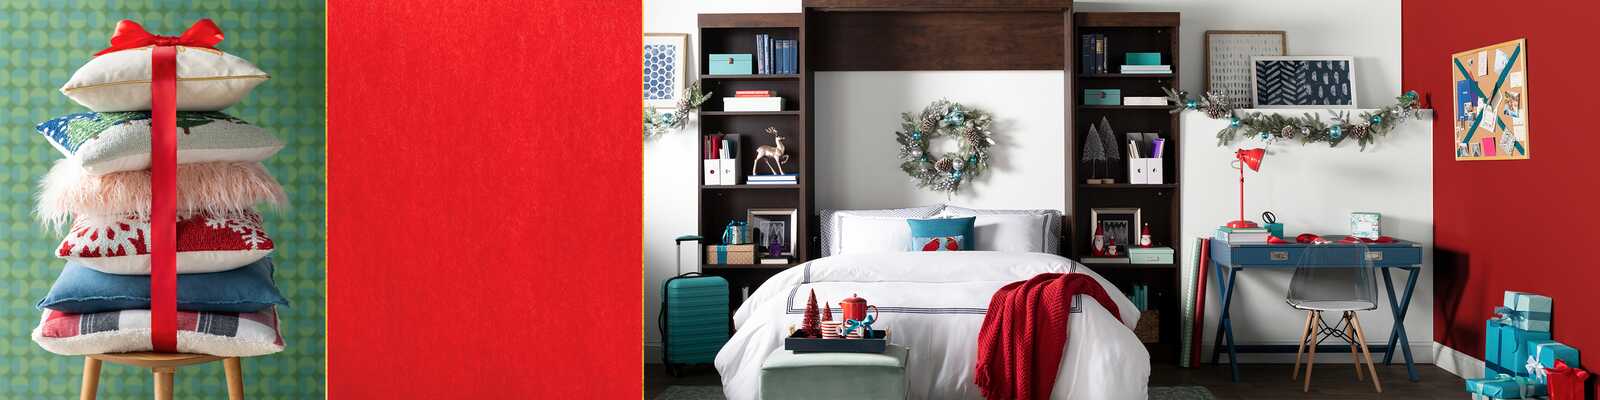 Wayfaircom Online Home Store For Furniture Decor